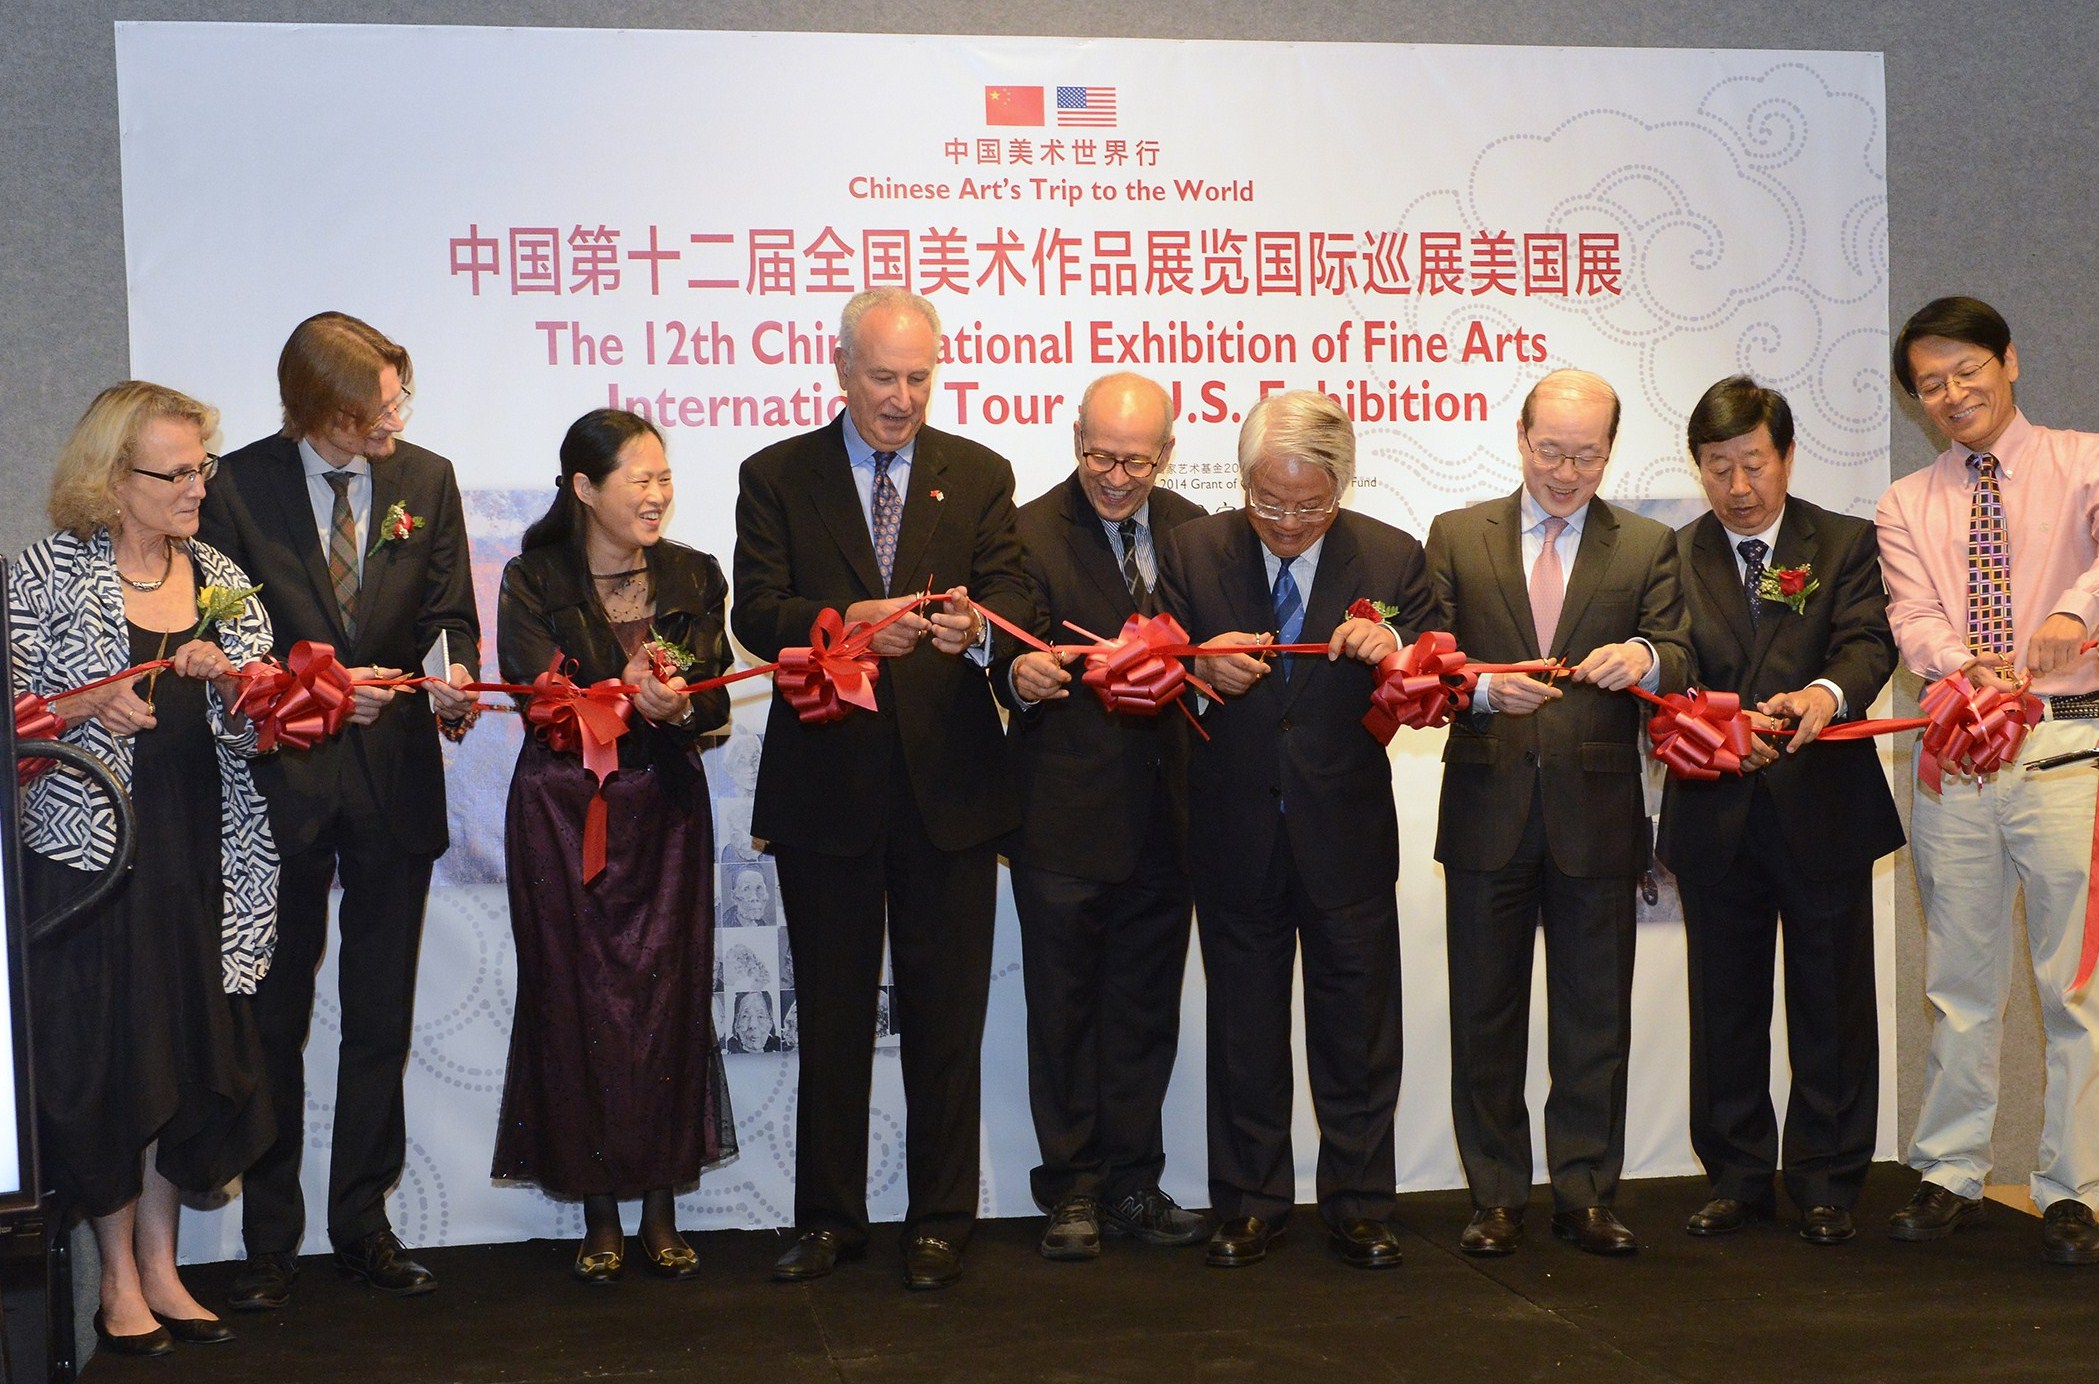 Bonhams ribbon cutting opening the 12th China National Exhibition of Fine Arts